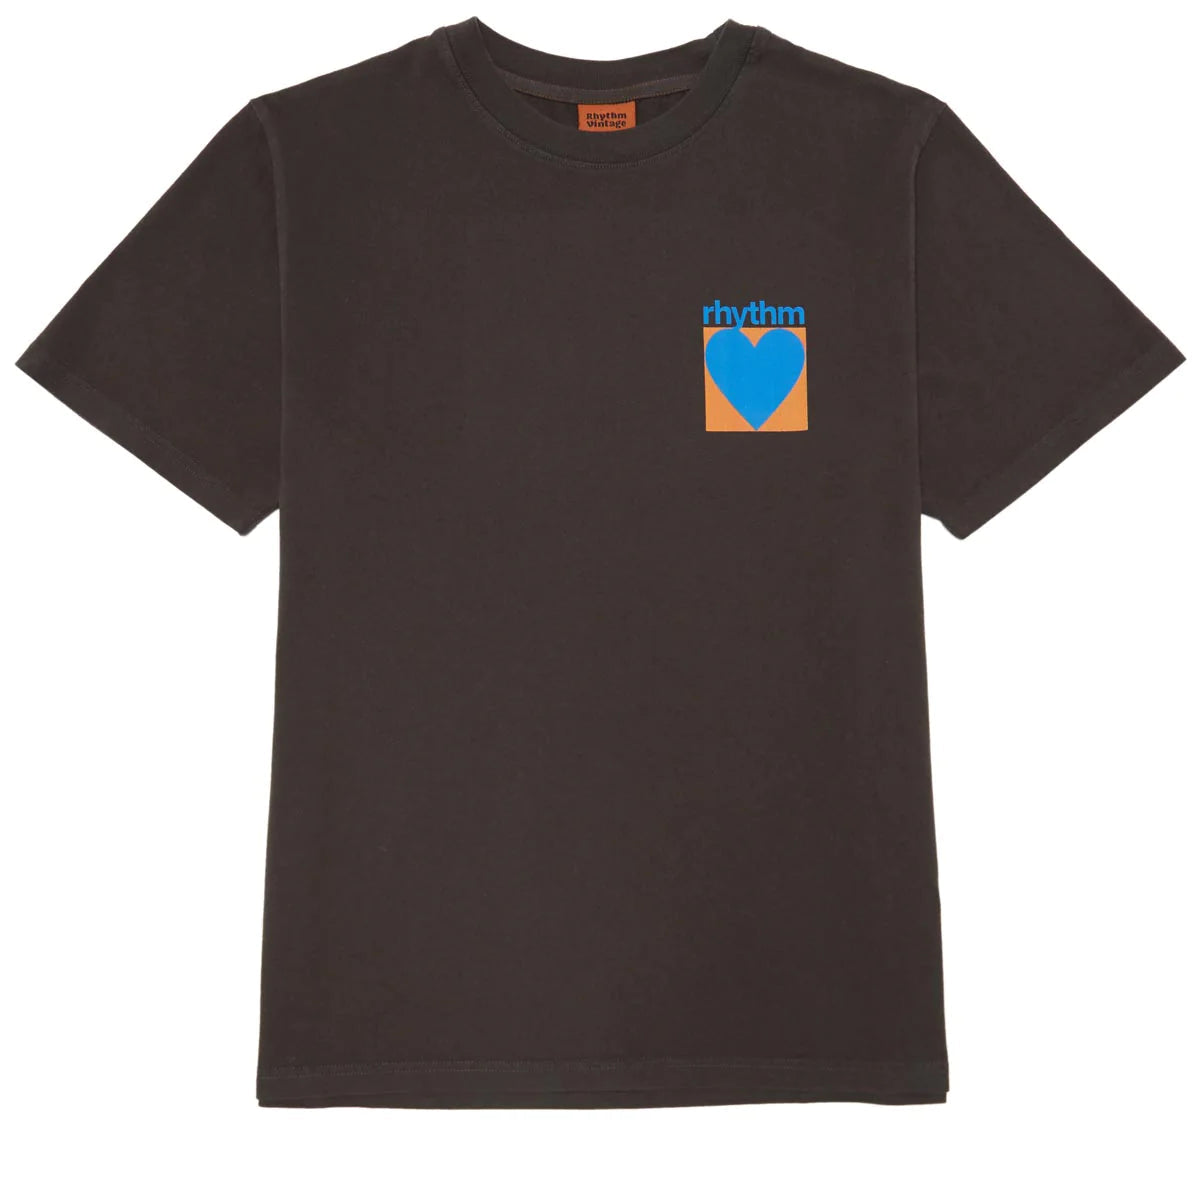 RHYTHM Factory Vintage T-Shirt Vintage Black Men's Short Sleeve T-Shirts Rhythm 